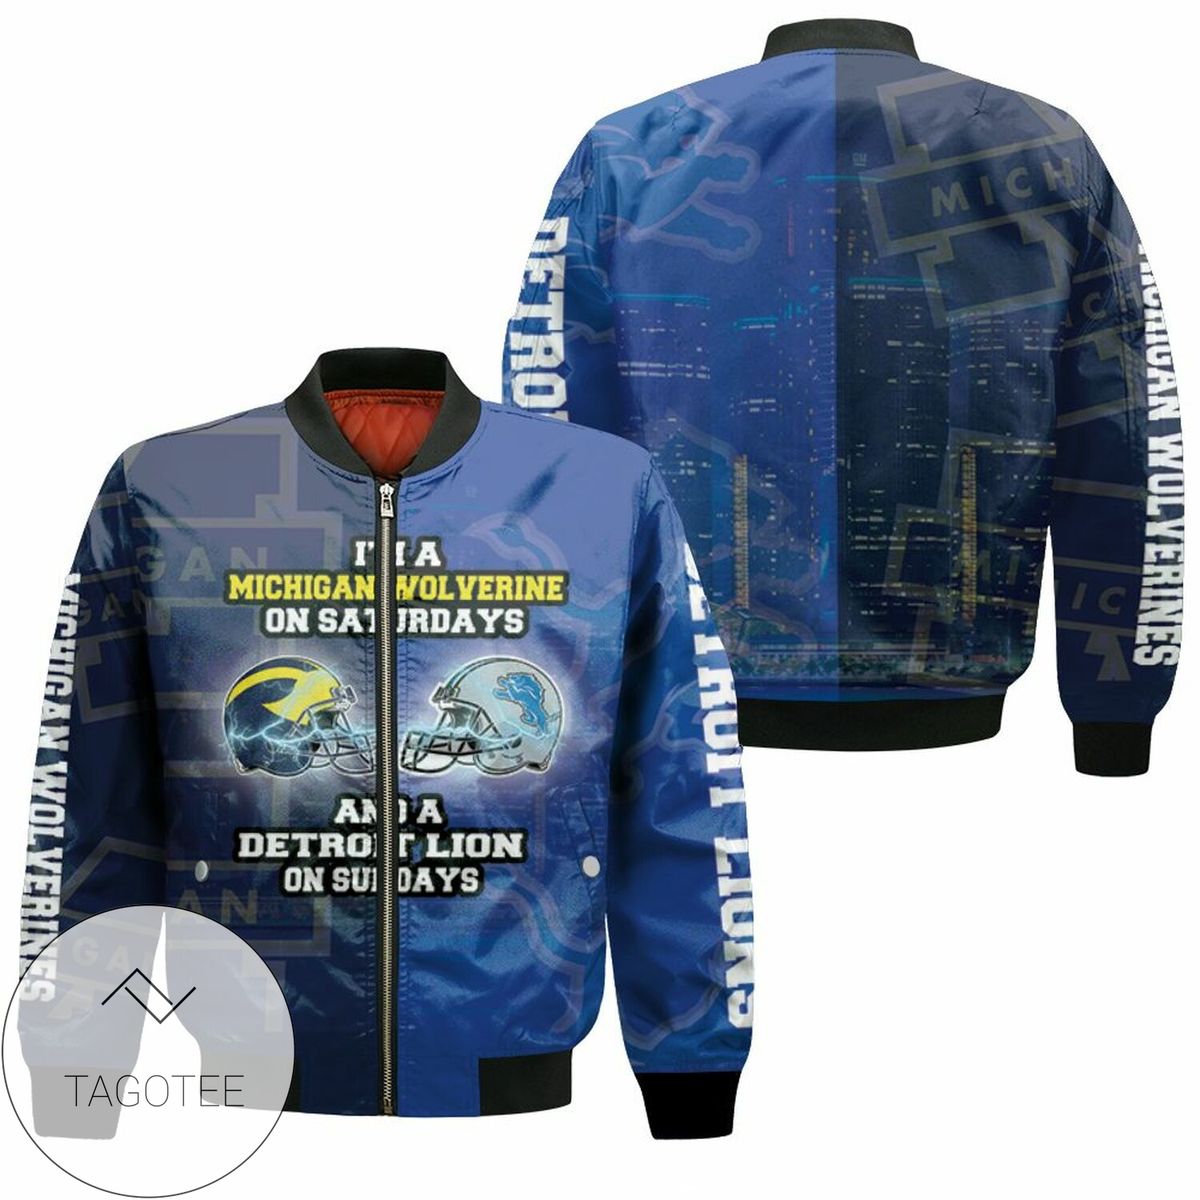 Michigan Wolverine On Saturdays And Detroit Lion On Sundays Fan 3D T Shirt Hoodie Sweater Jersey Bomber Jacket